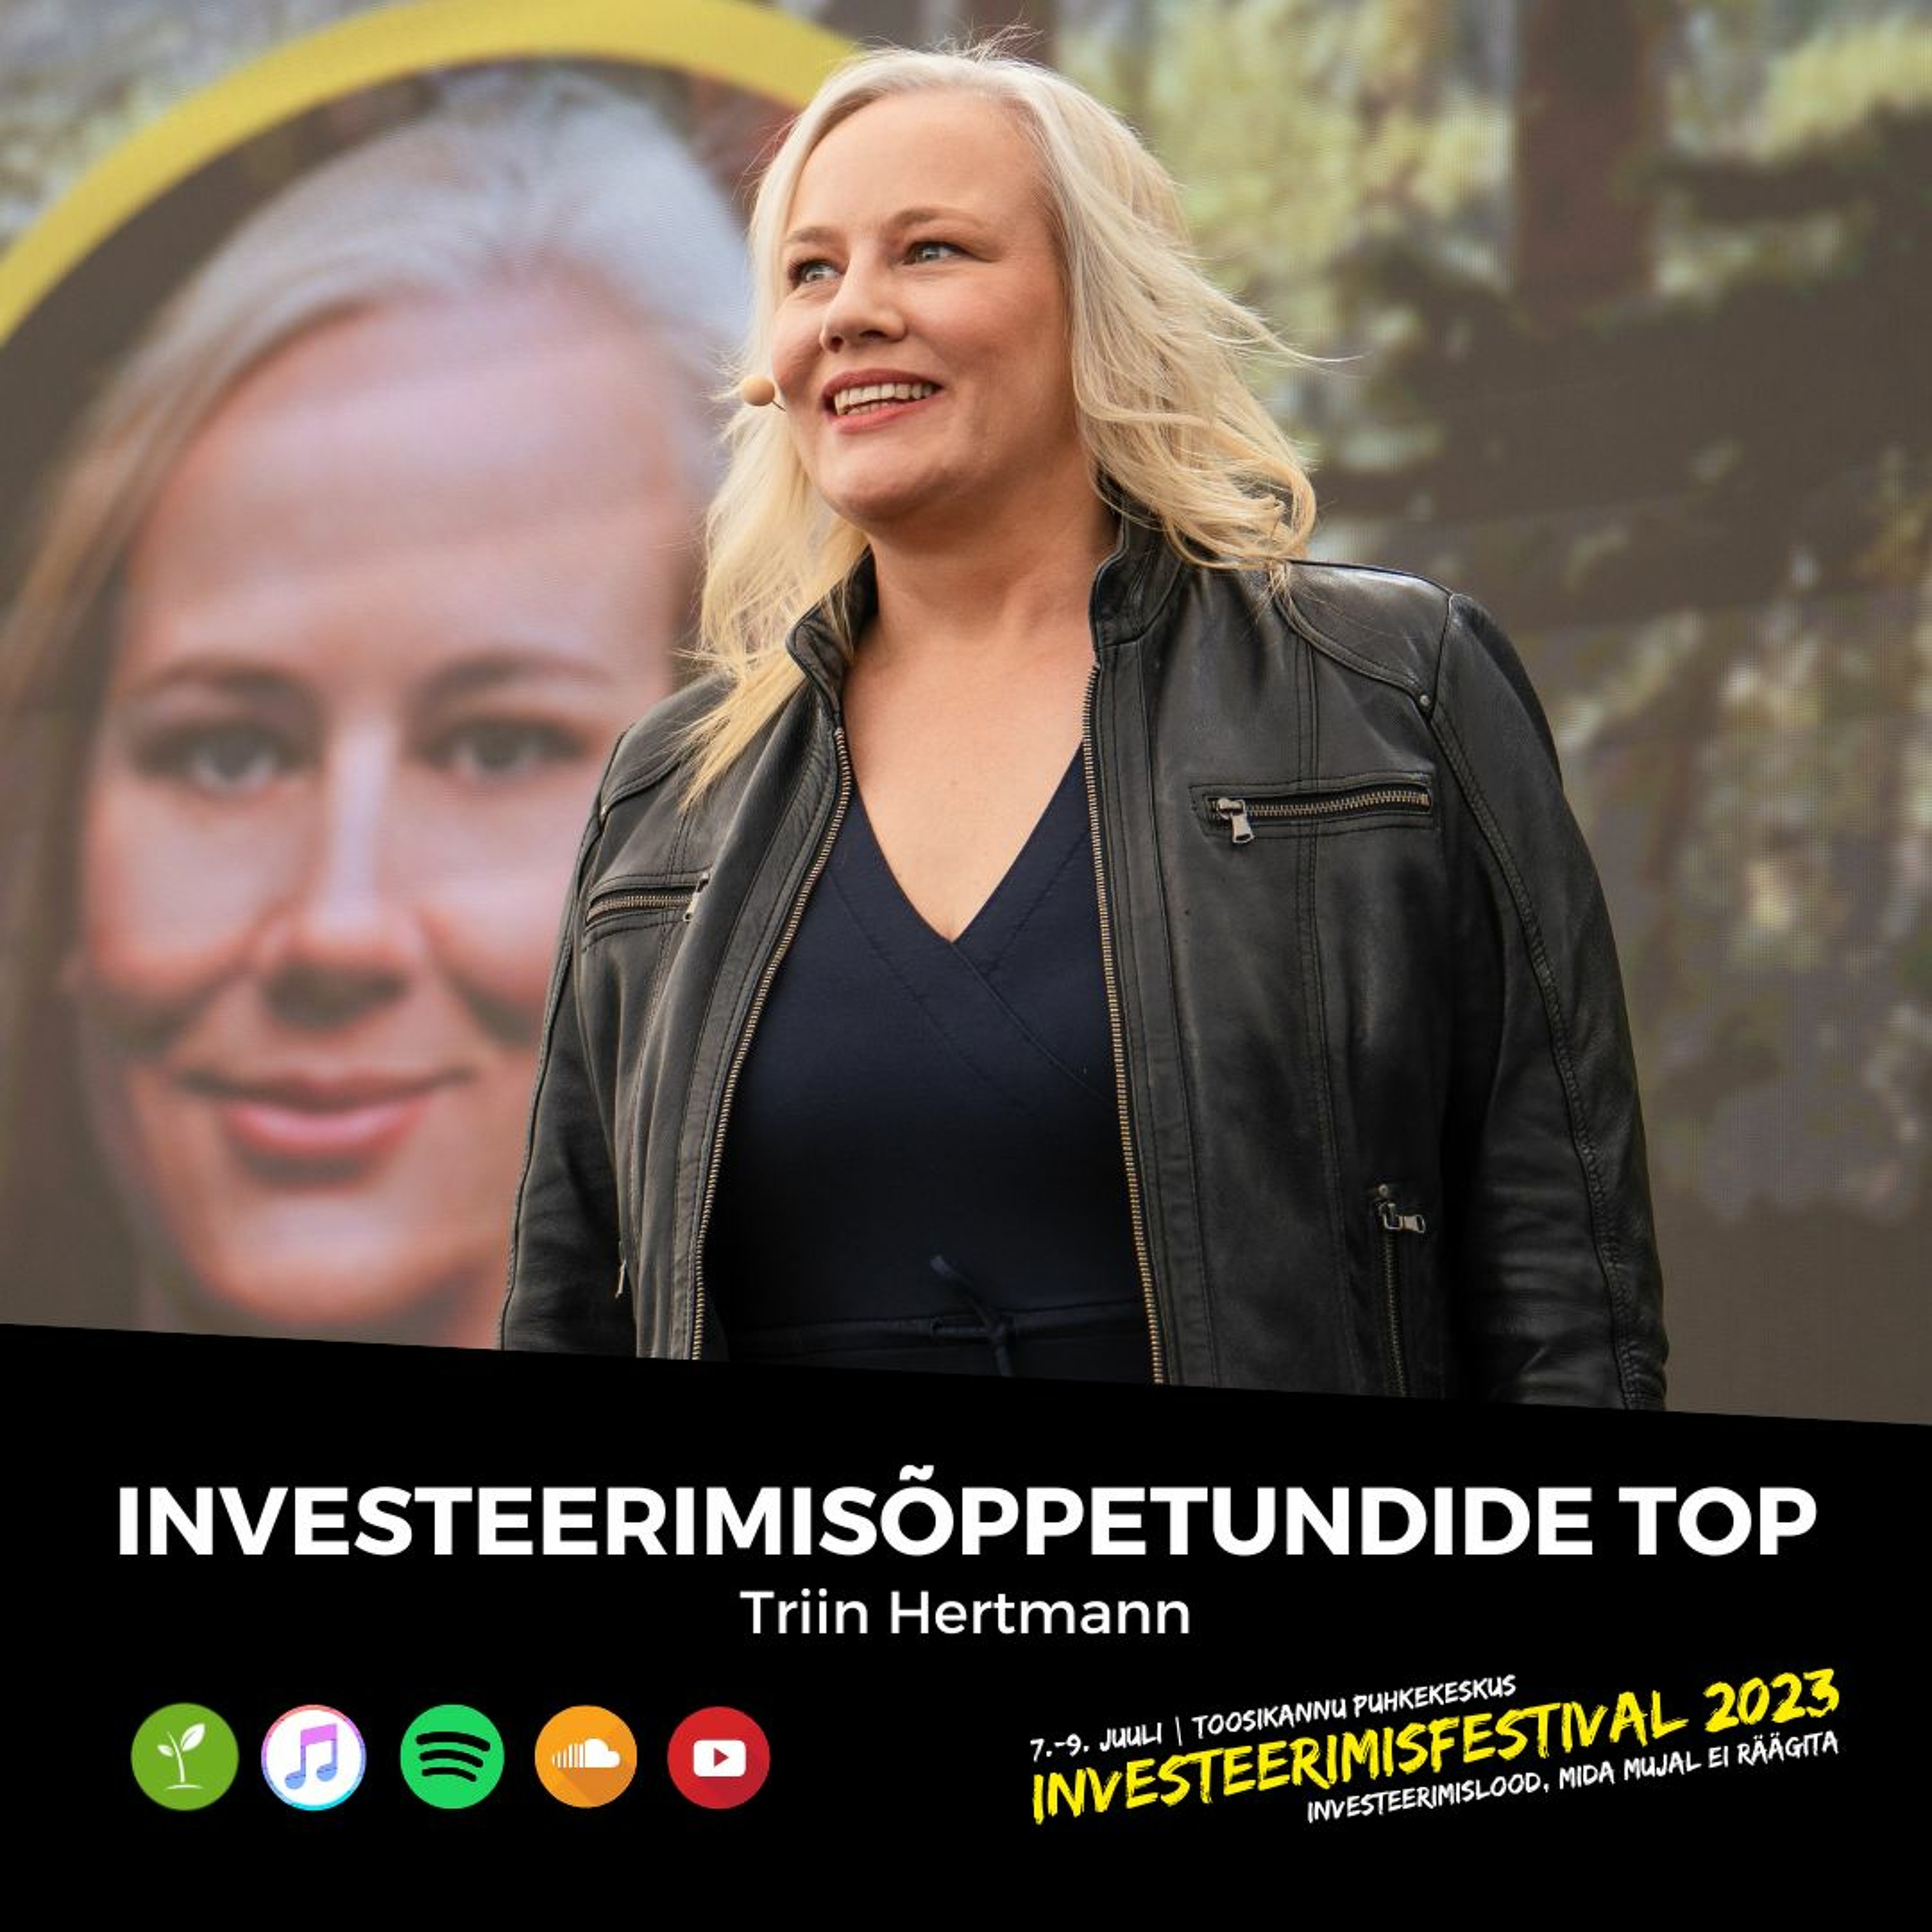 Investeerimisõppetundide TOP – Triin Hertmann